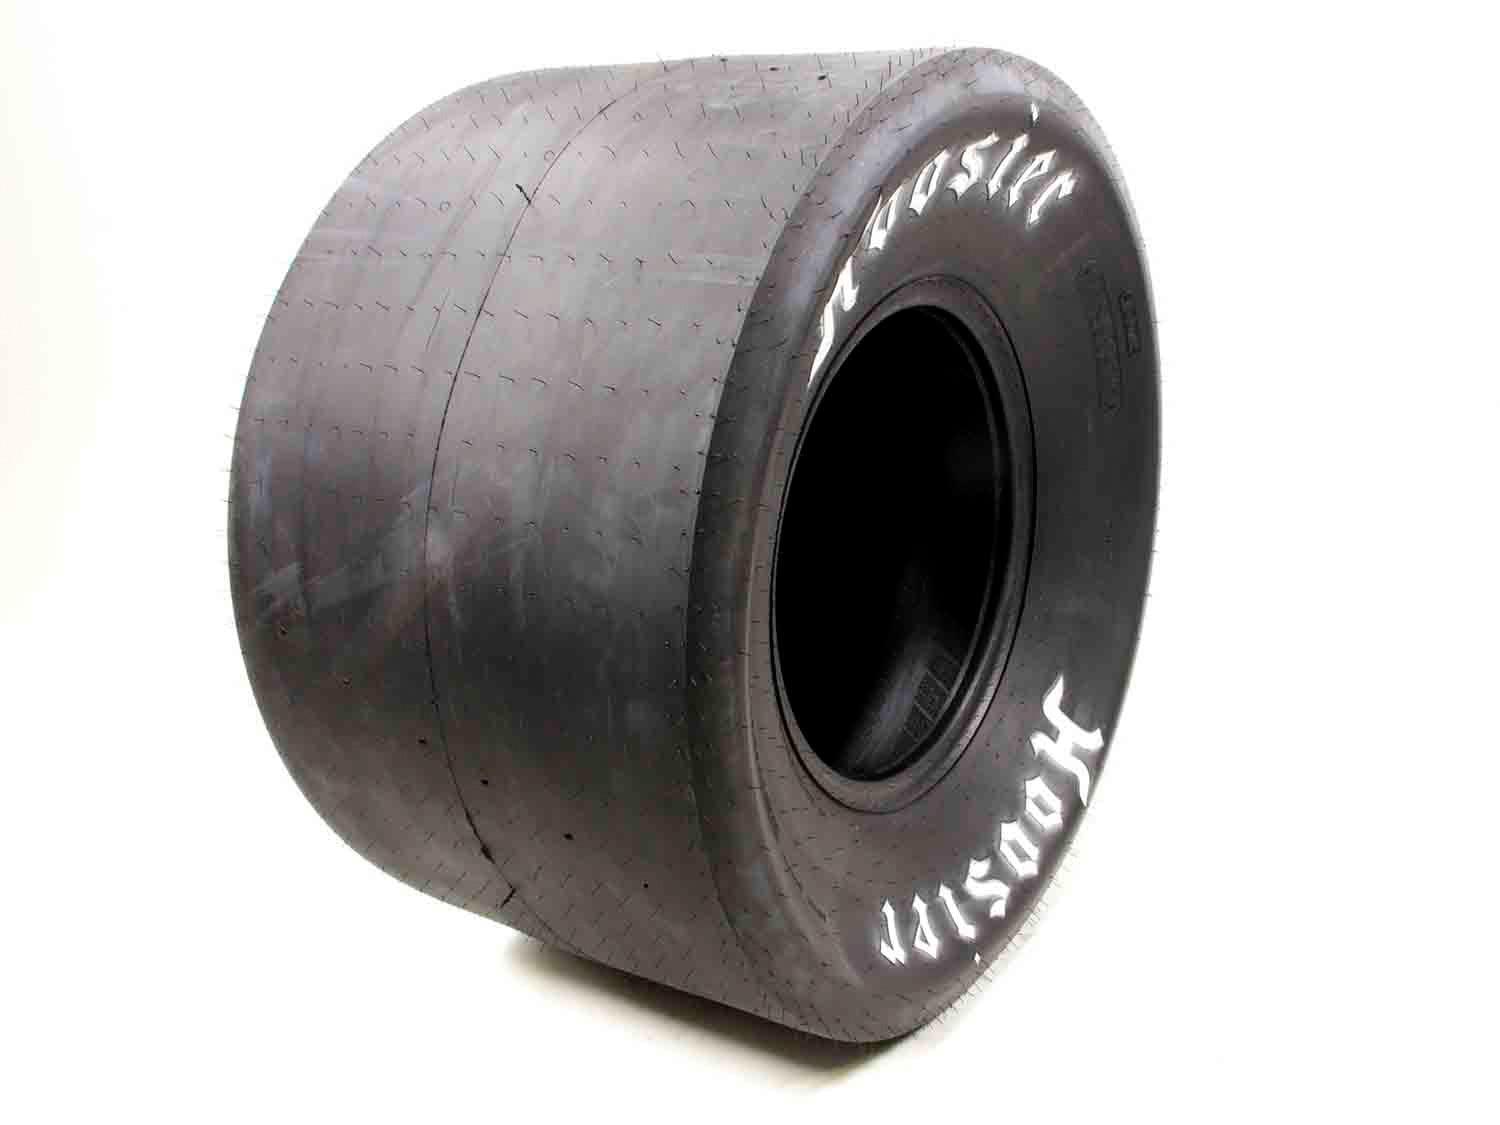 Drag Tire 17.0/36.0-16 C2055 Compound - Burlile Performance Products